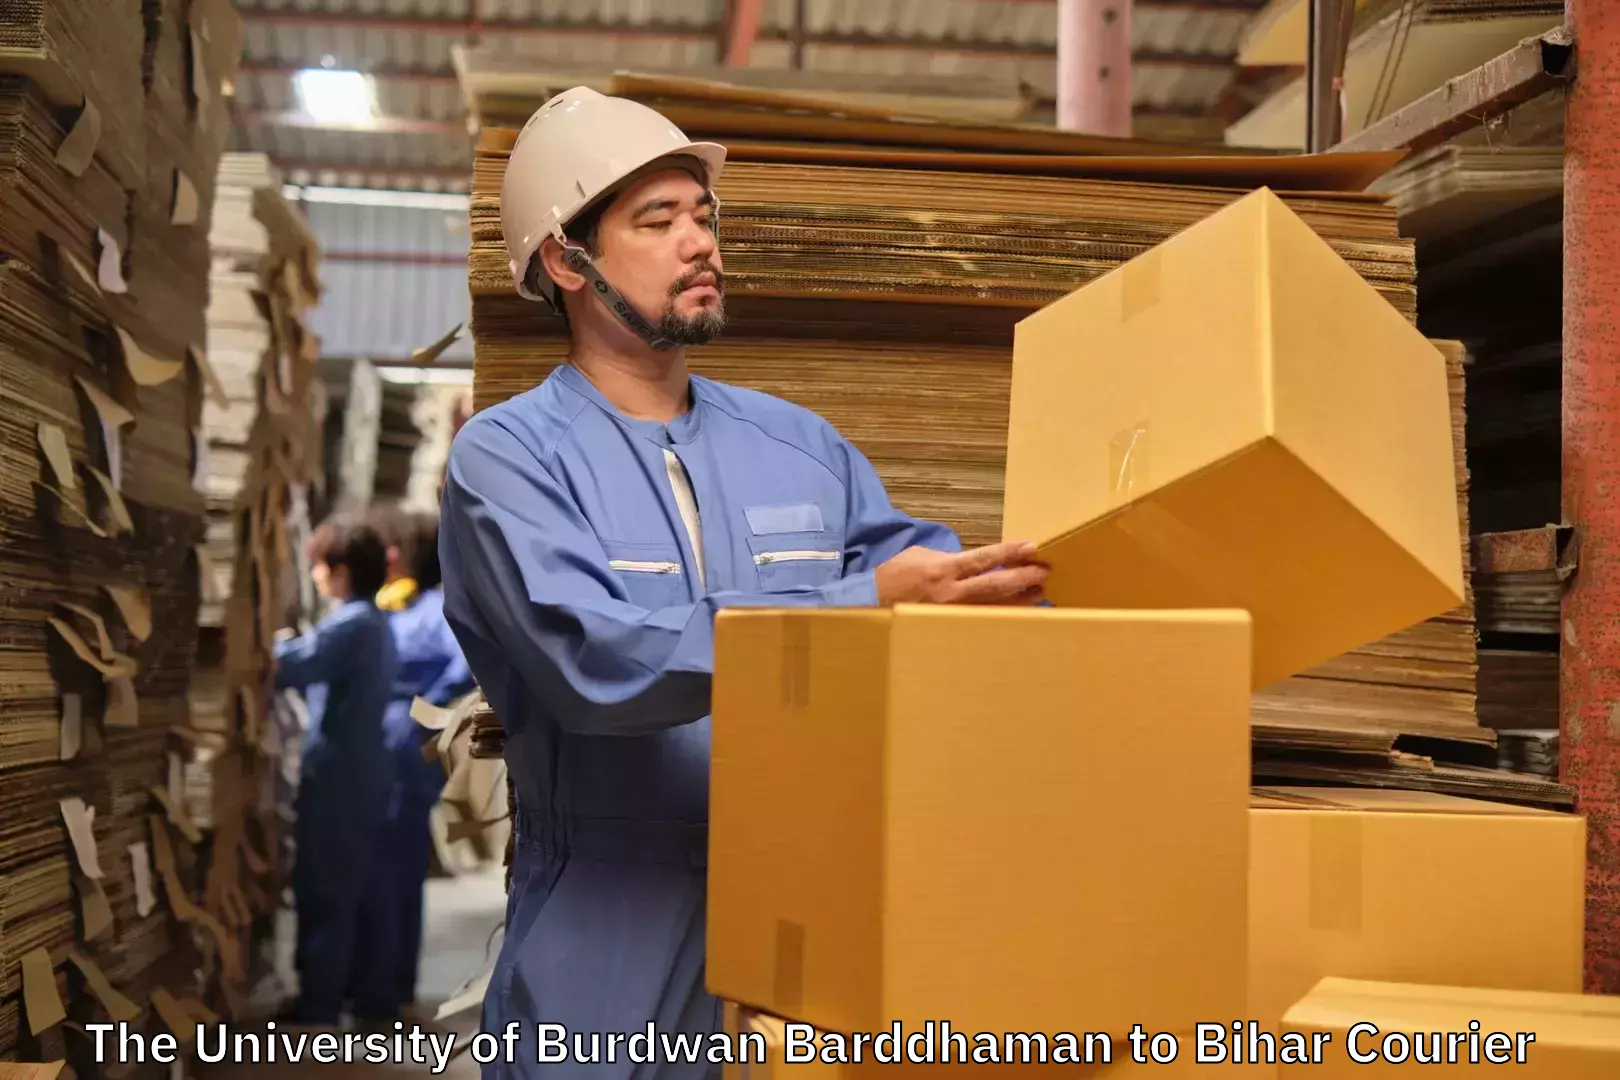 Luggage transport company The University of Burdwan Barddhaman to Dinara